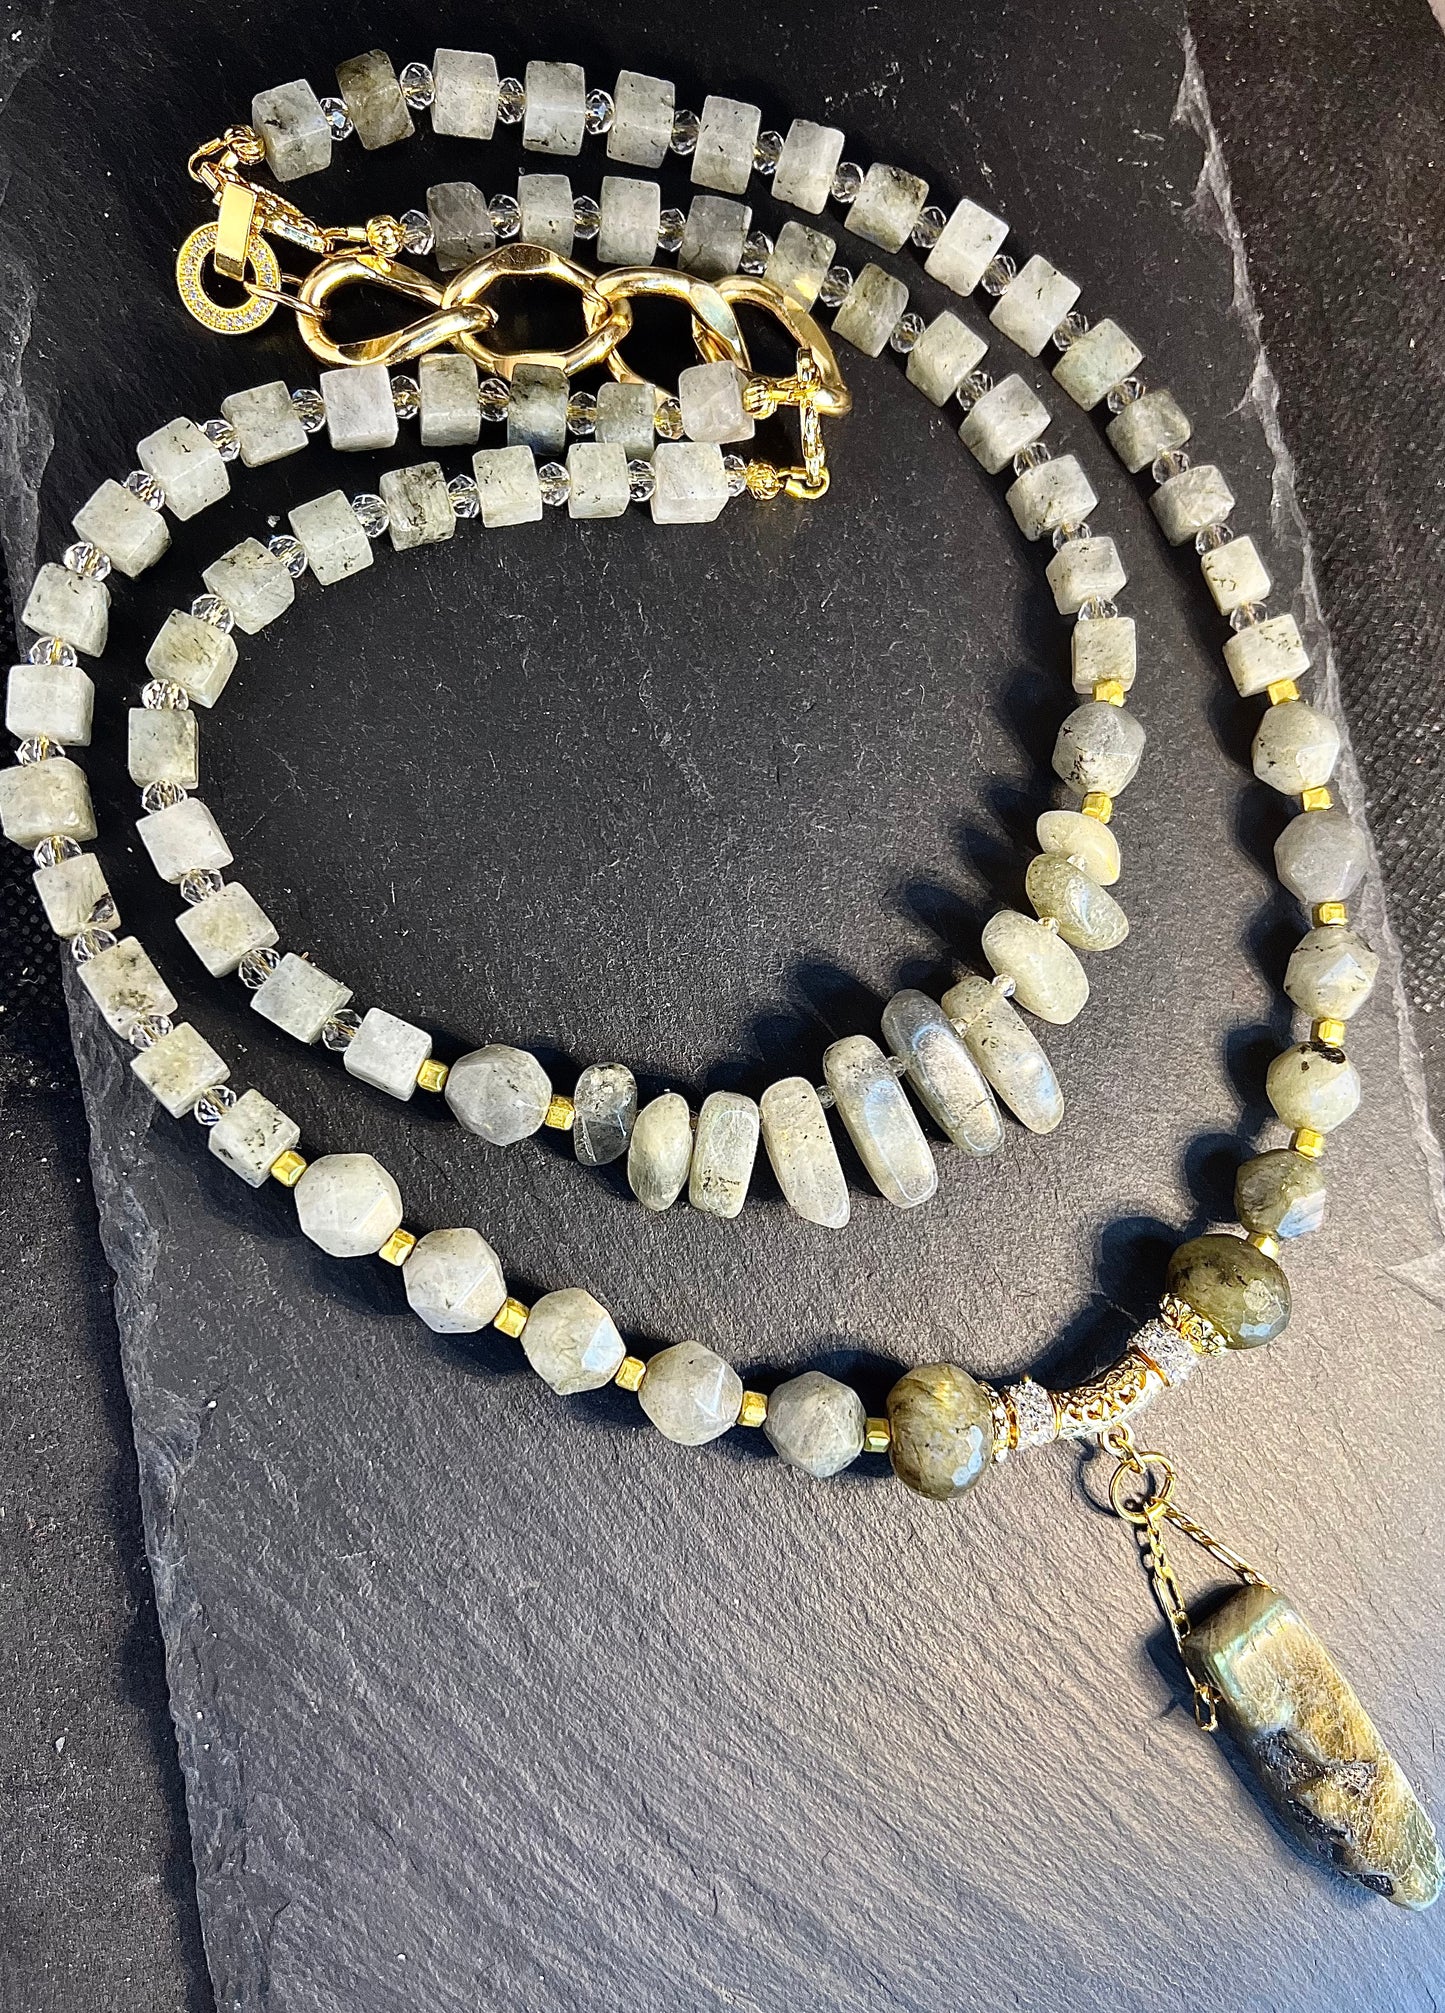 Labradorite gemstone black moonstone raw edelstein necklace halskette schmuck handmade vergoldet gold plated حجر الطاووس القمر الاسود لابرادورايت